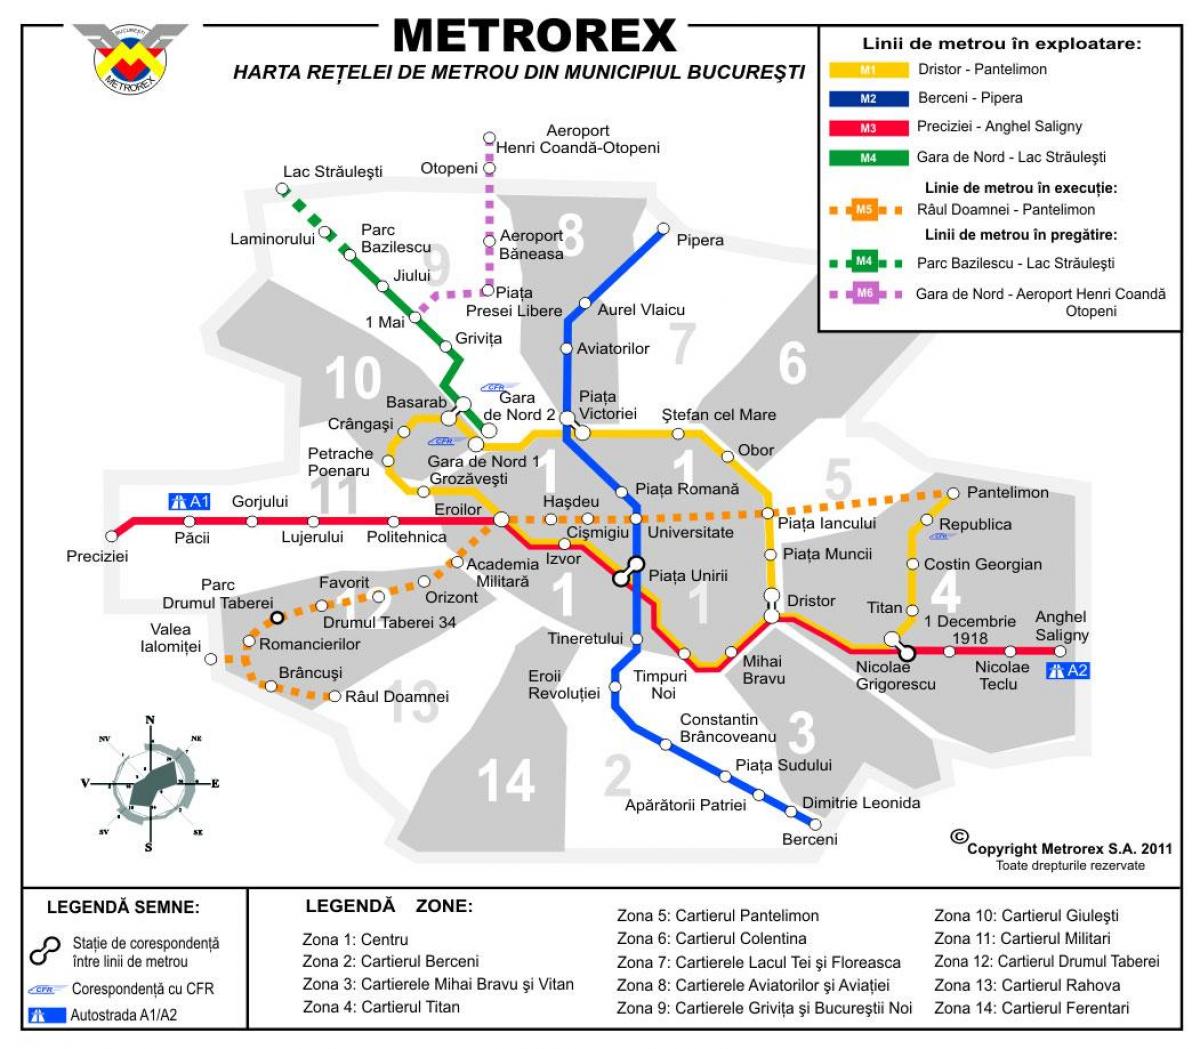 Zemljevid metrorex 